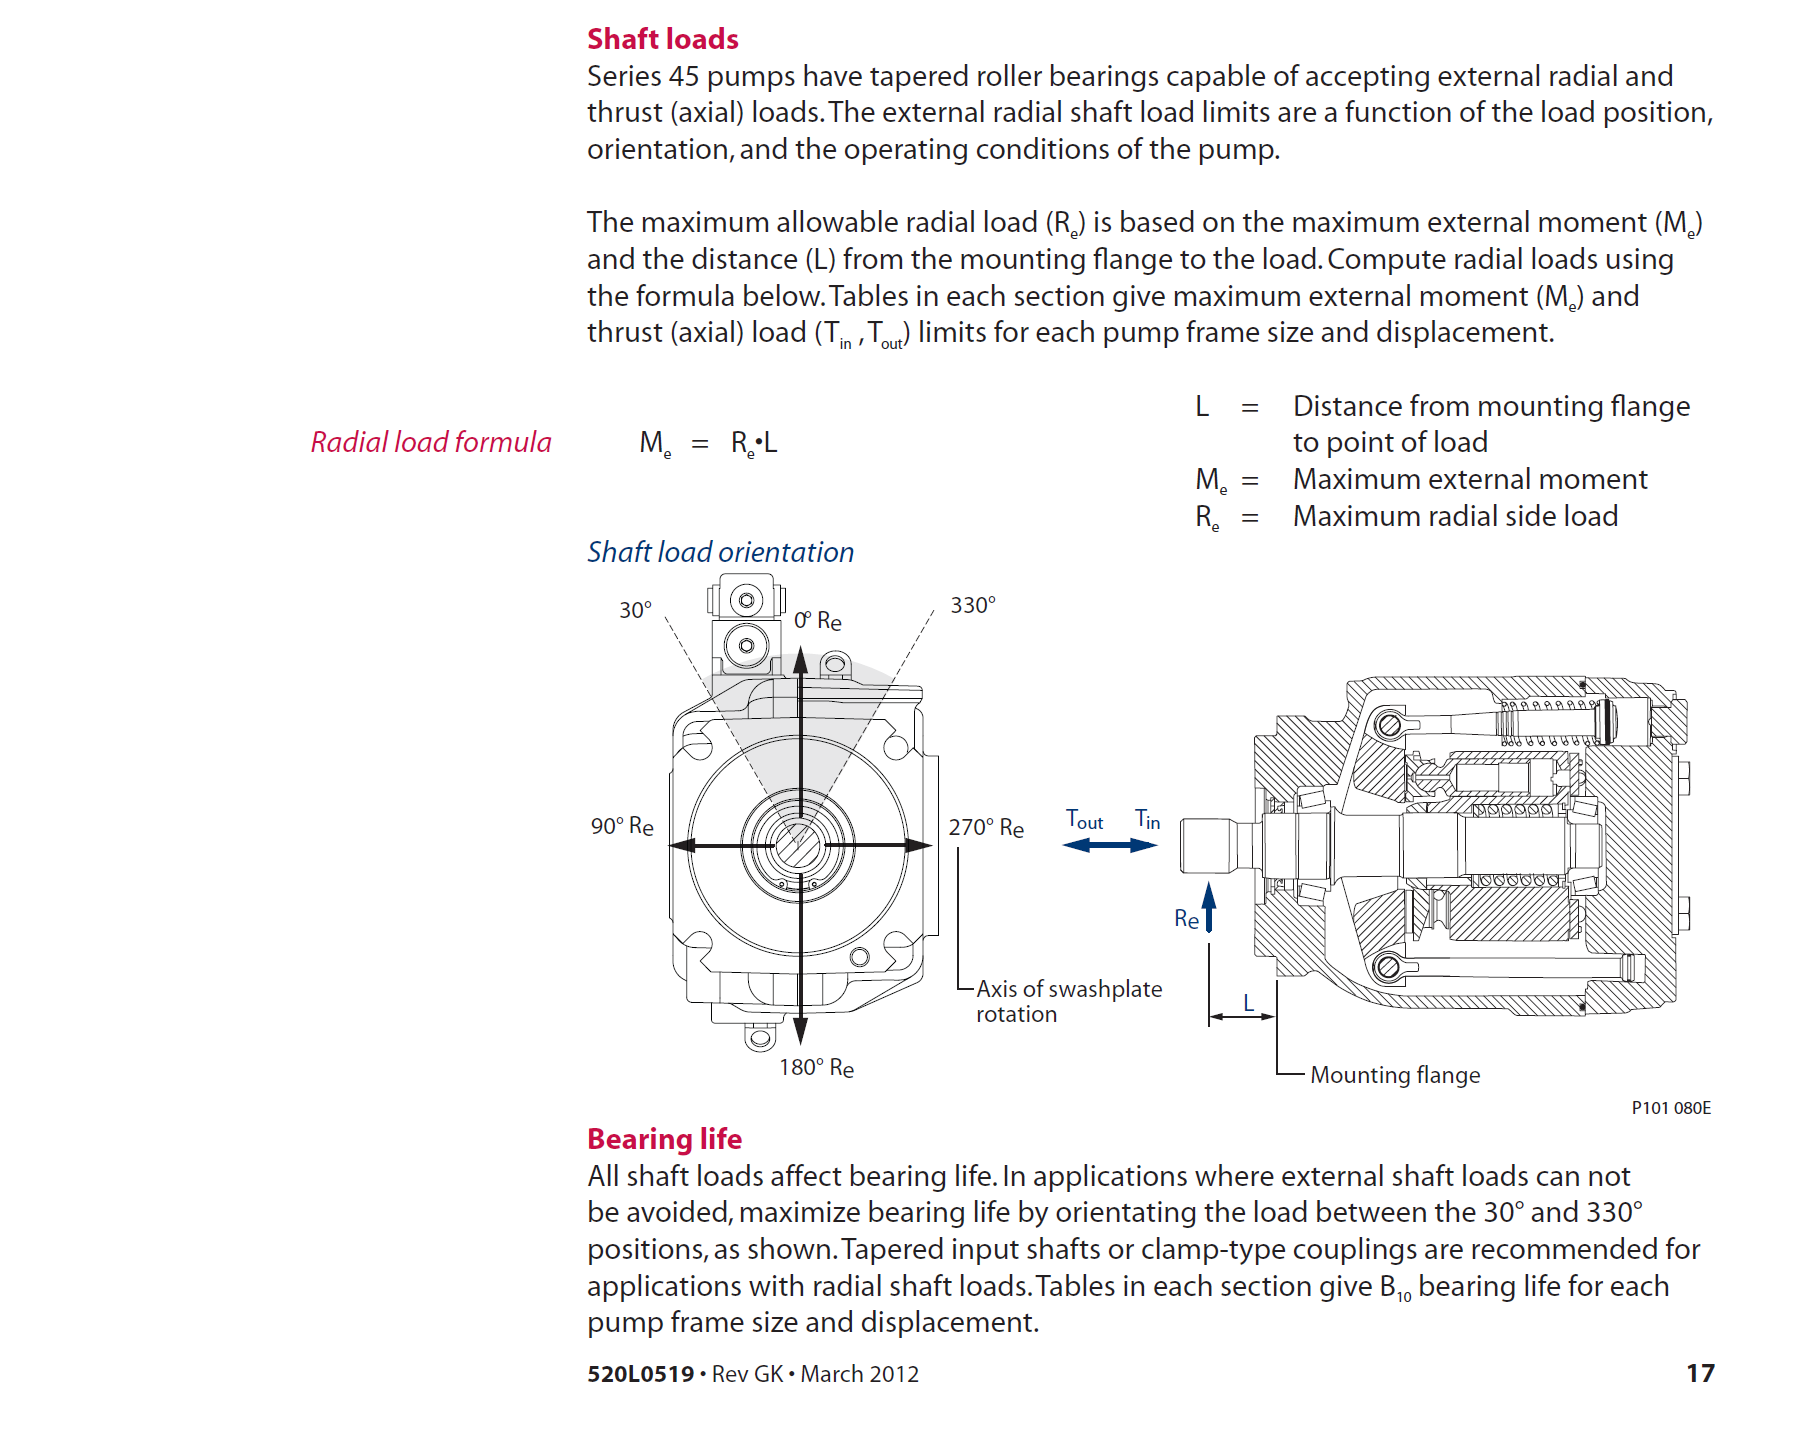 Danfoss series 45 pump recommended external radial shaft load direction